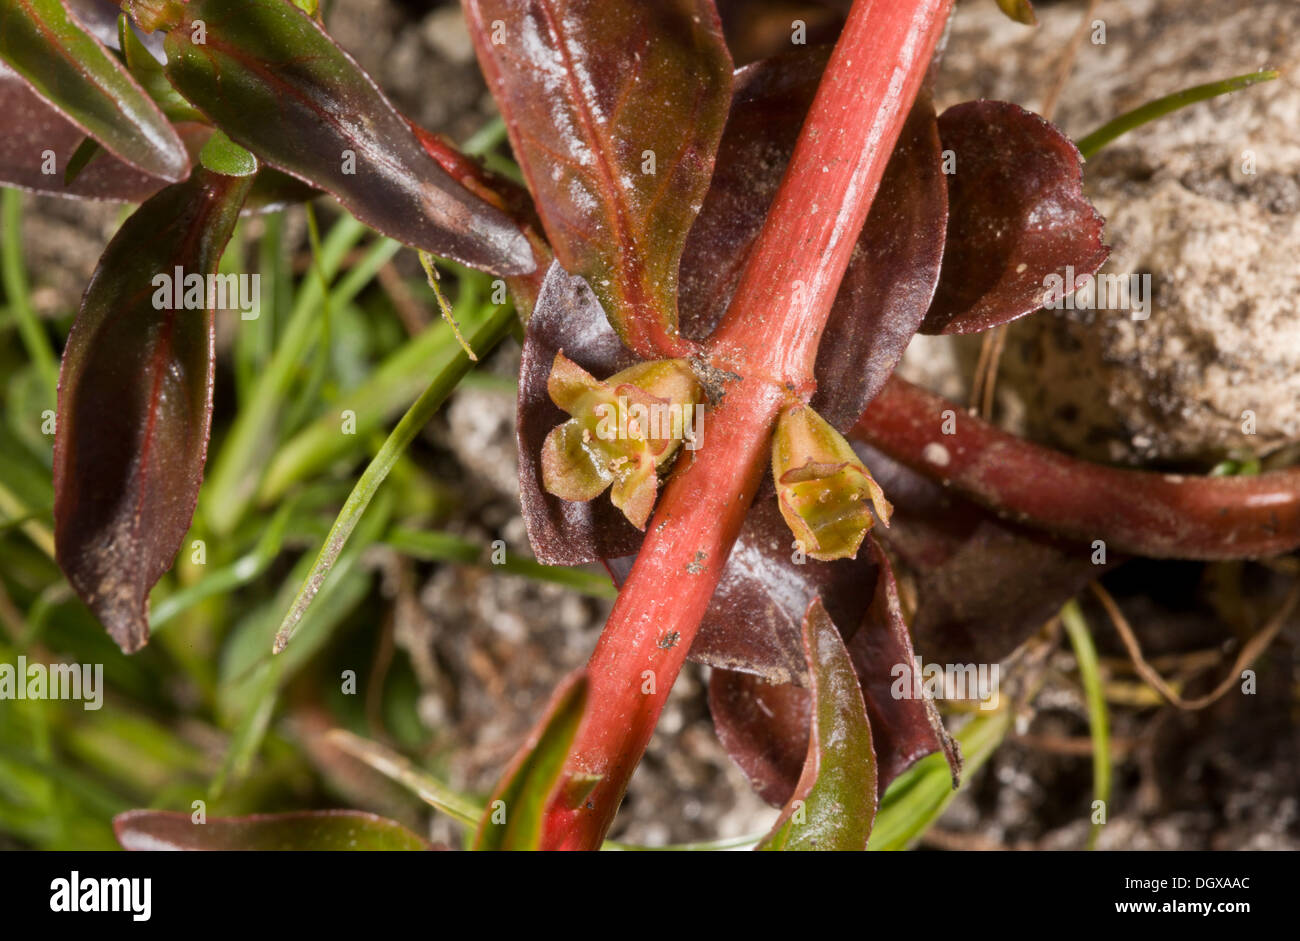 Hampshire-Portulak, Ludwigia Palustris in Blüte, im New Forest Teich. UK-Rarität. Hants. Stockfoto